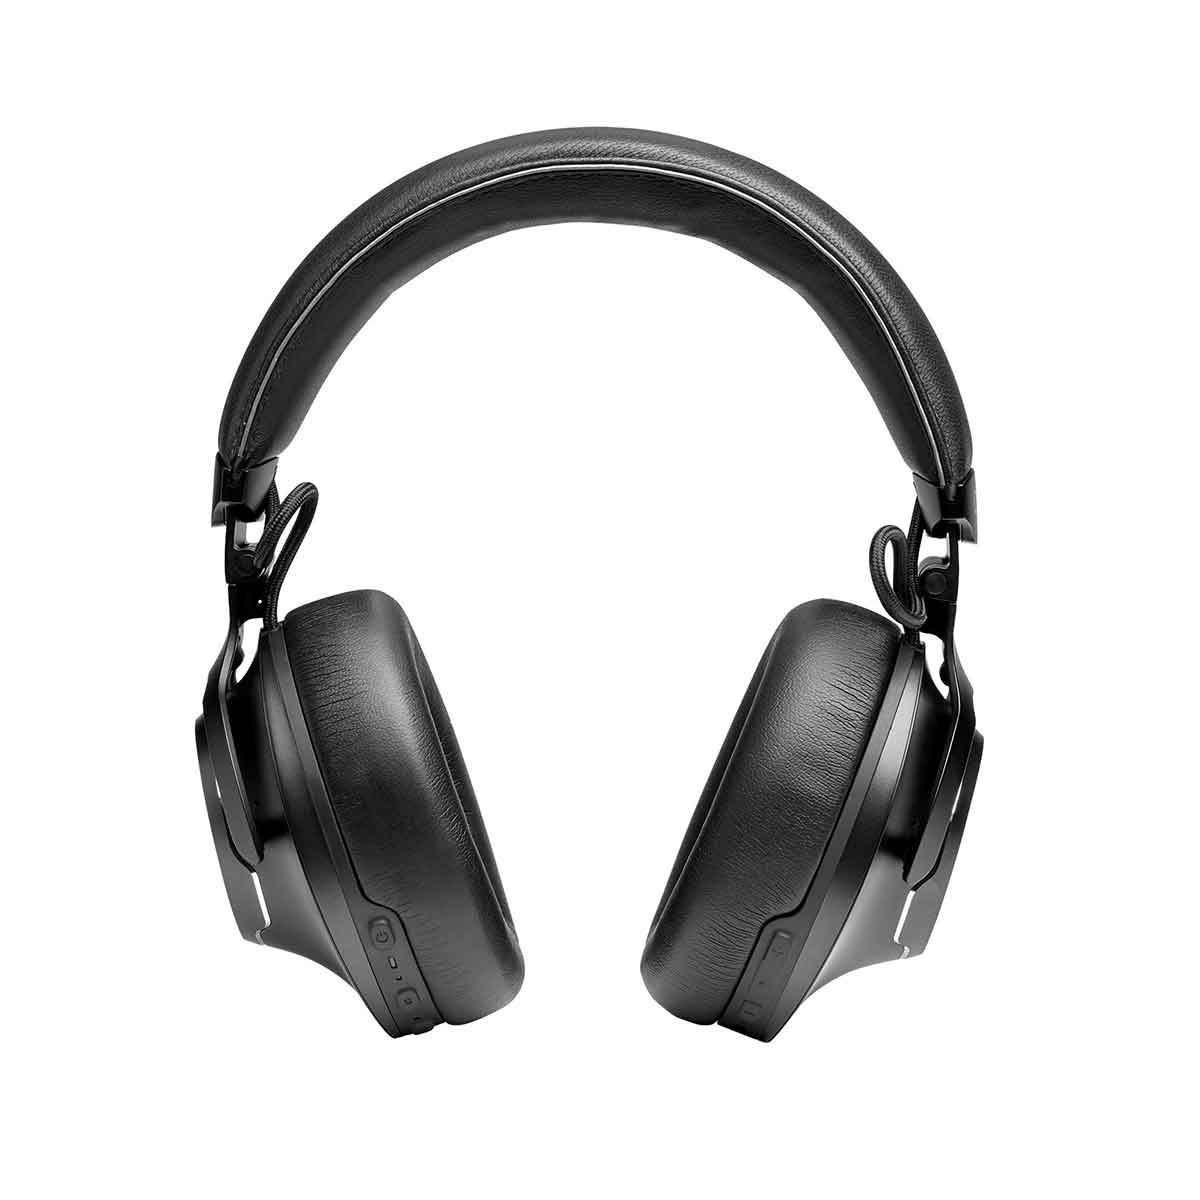 JBL CLUB ONE Wireless Over-Ear Cancelling Headphones | Advice